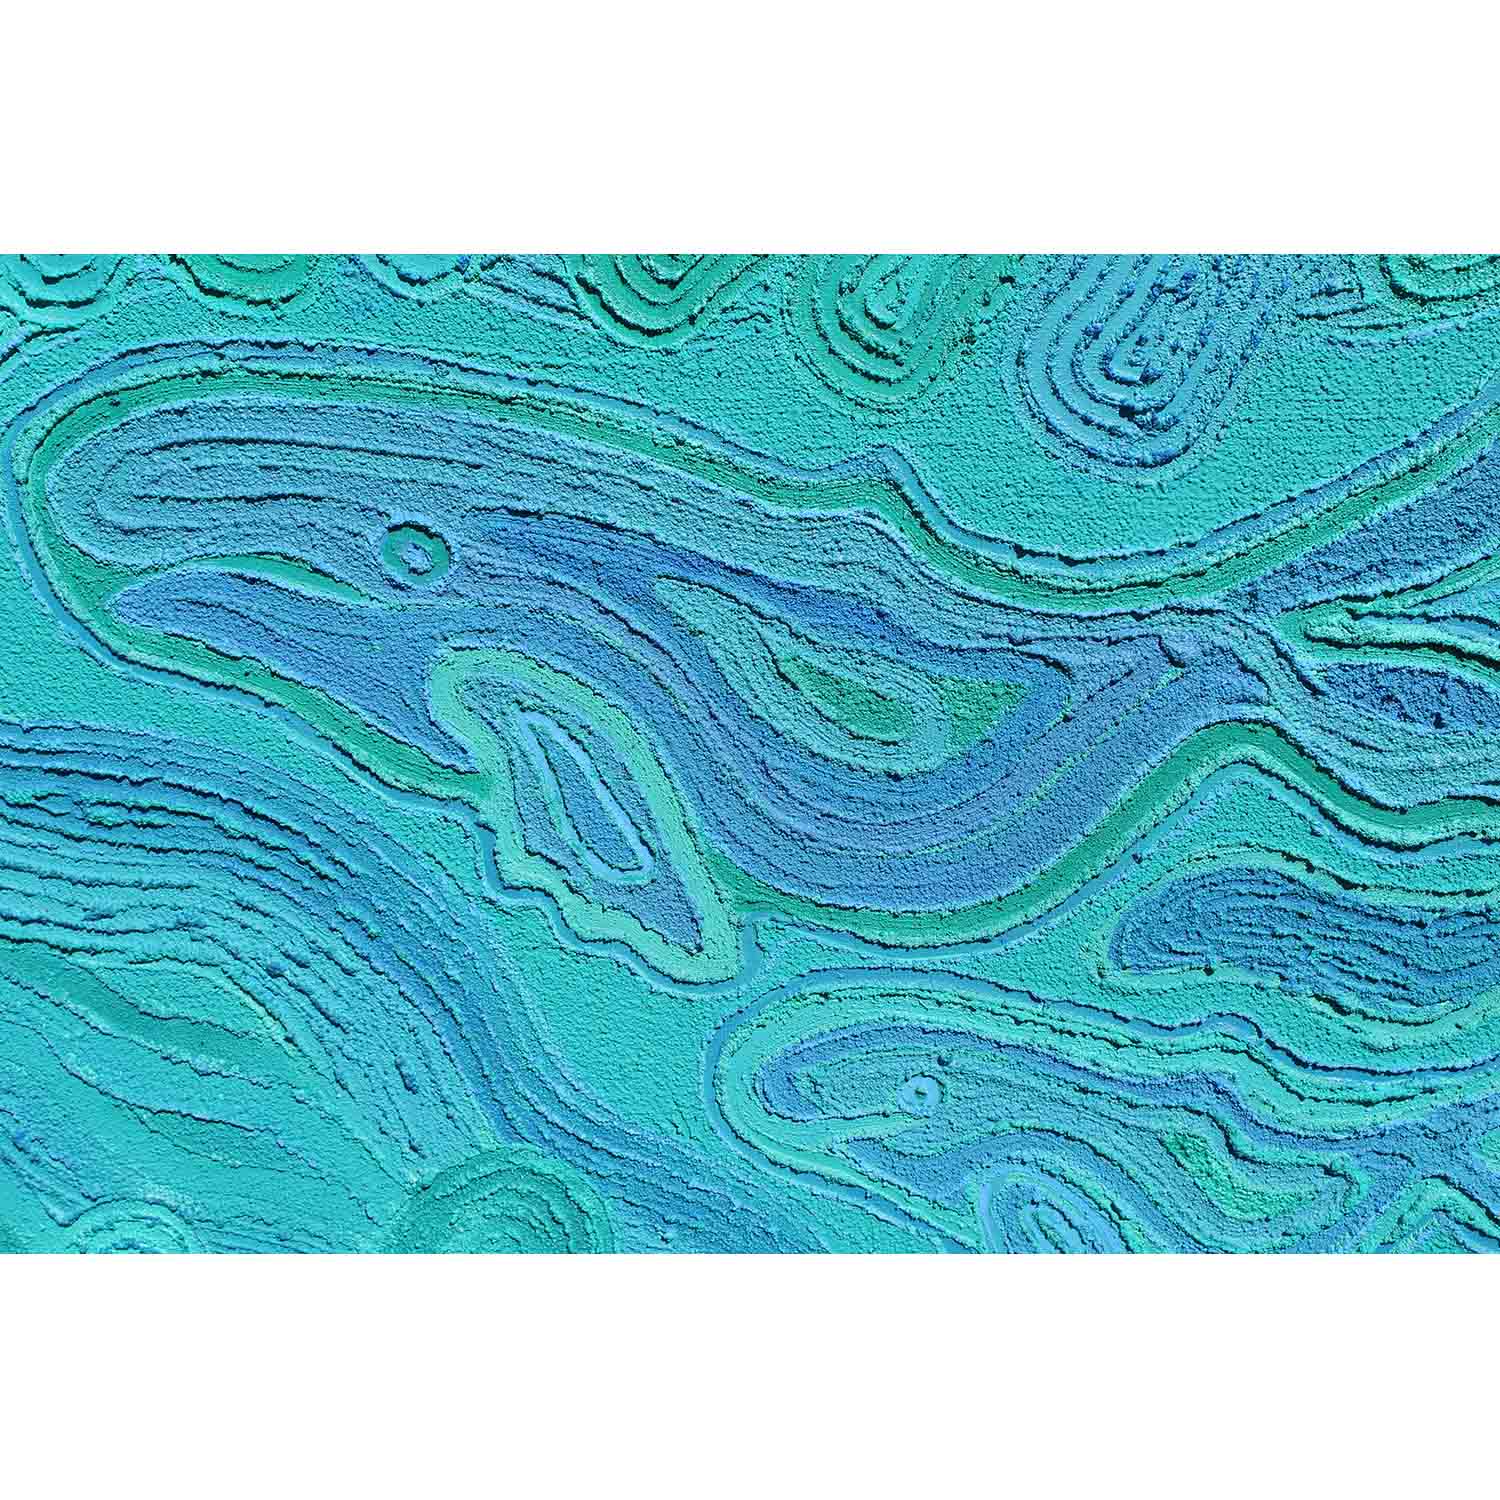 Turungkan Yapung - Whale Pathway - Saretta Art & Design